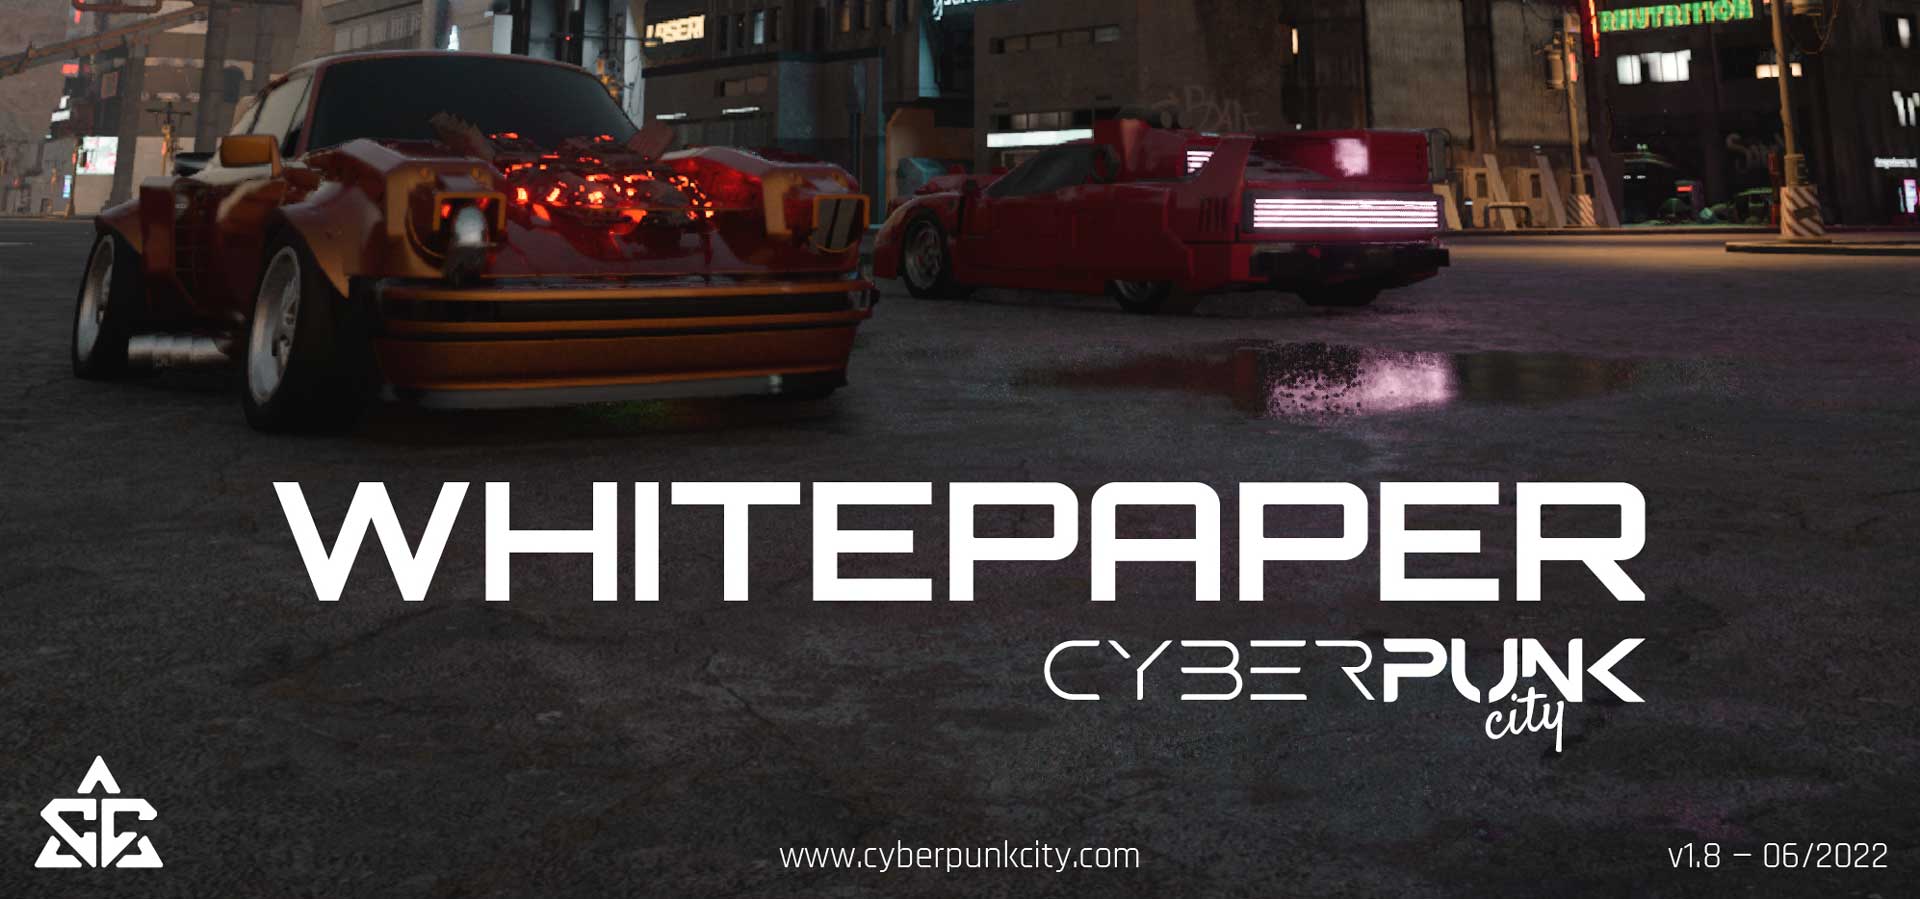 Cyberpunk City Whitepaper